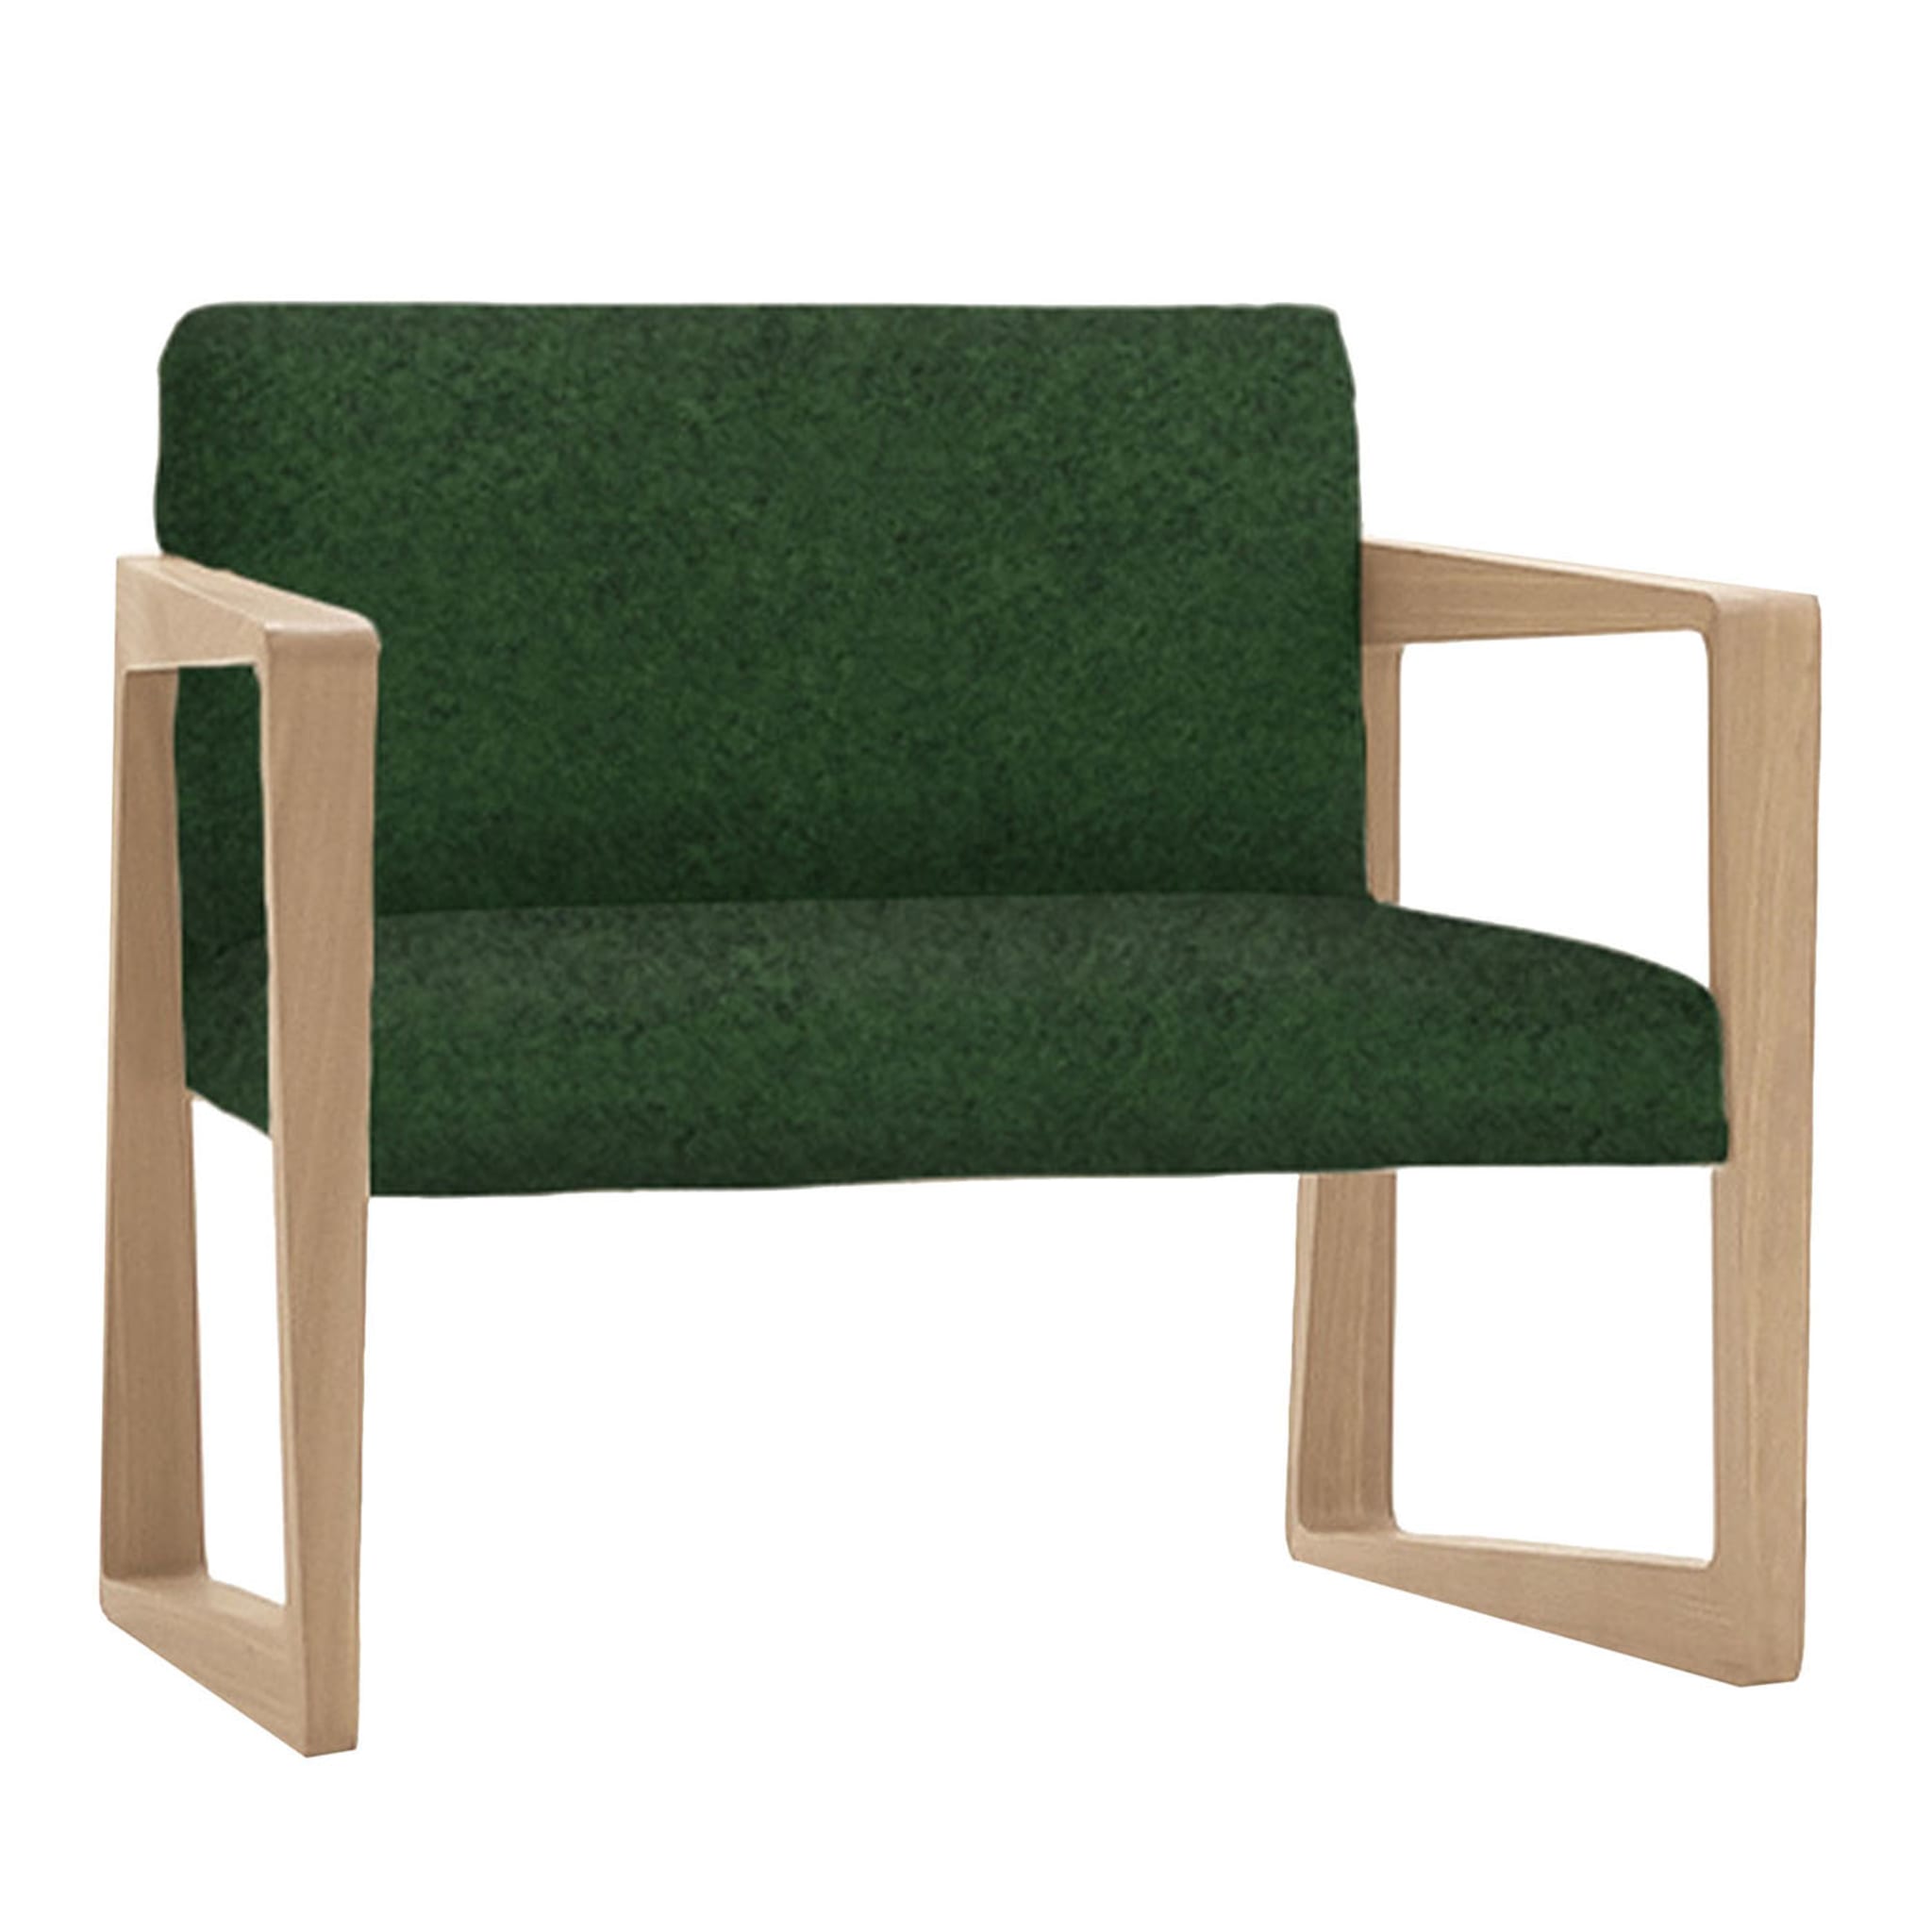 Askew Green Armchair by Daniel Fintzi - Main view